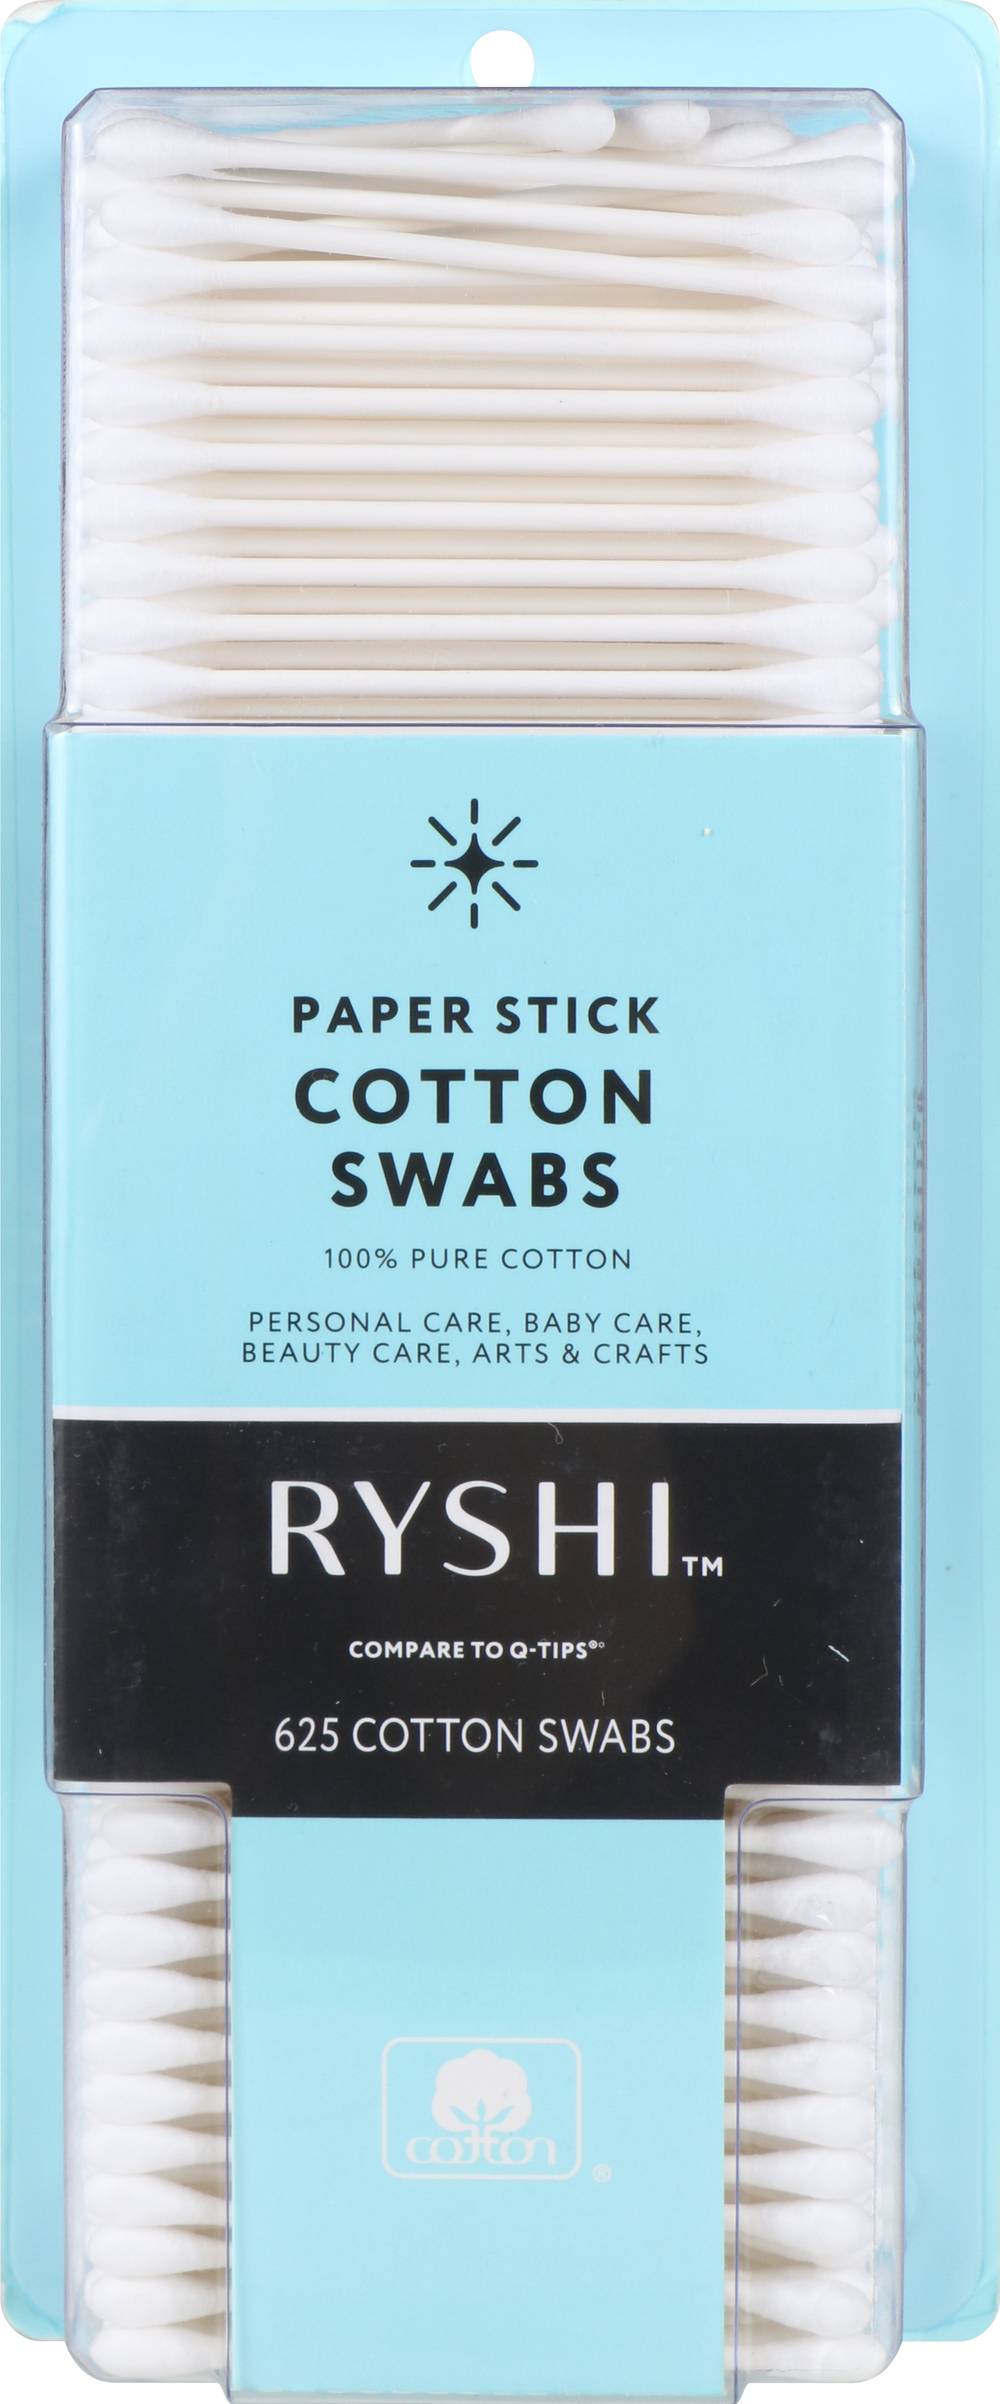 Ryshi Cotton Swabs (625 ct)